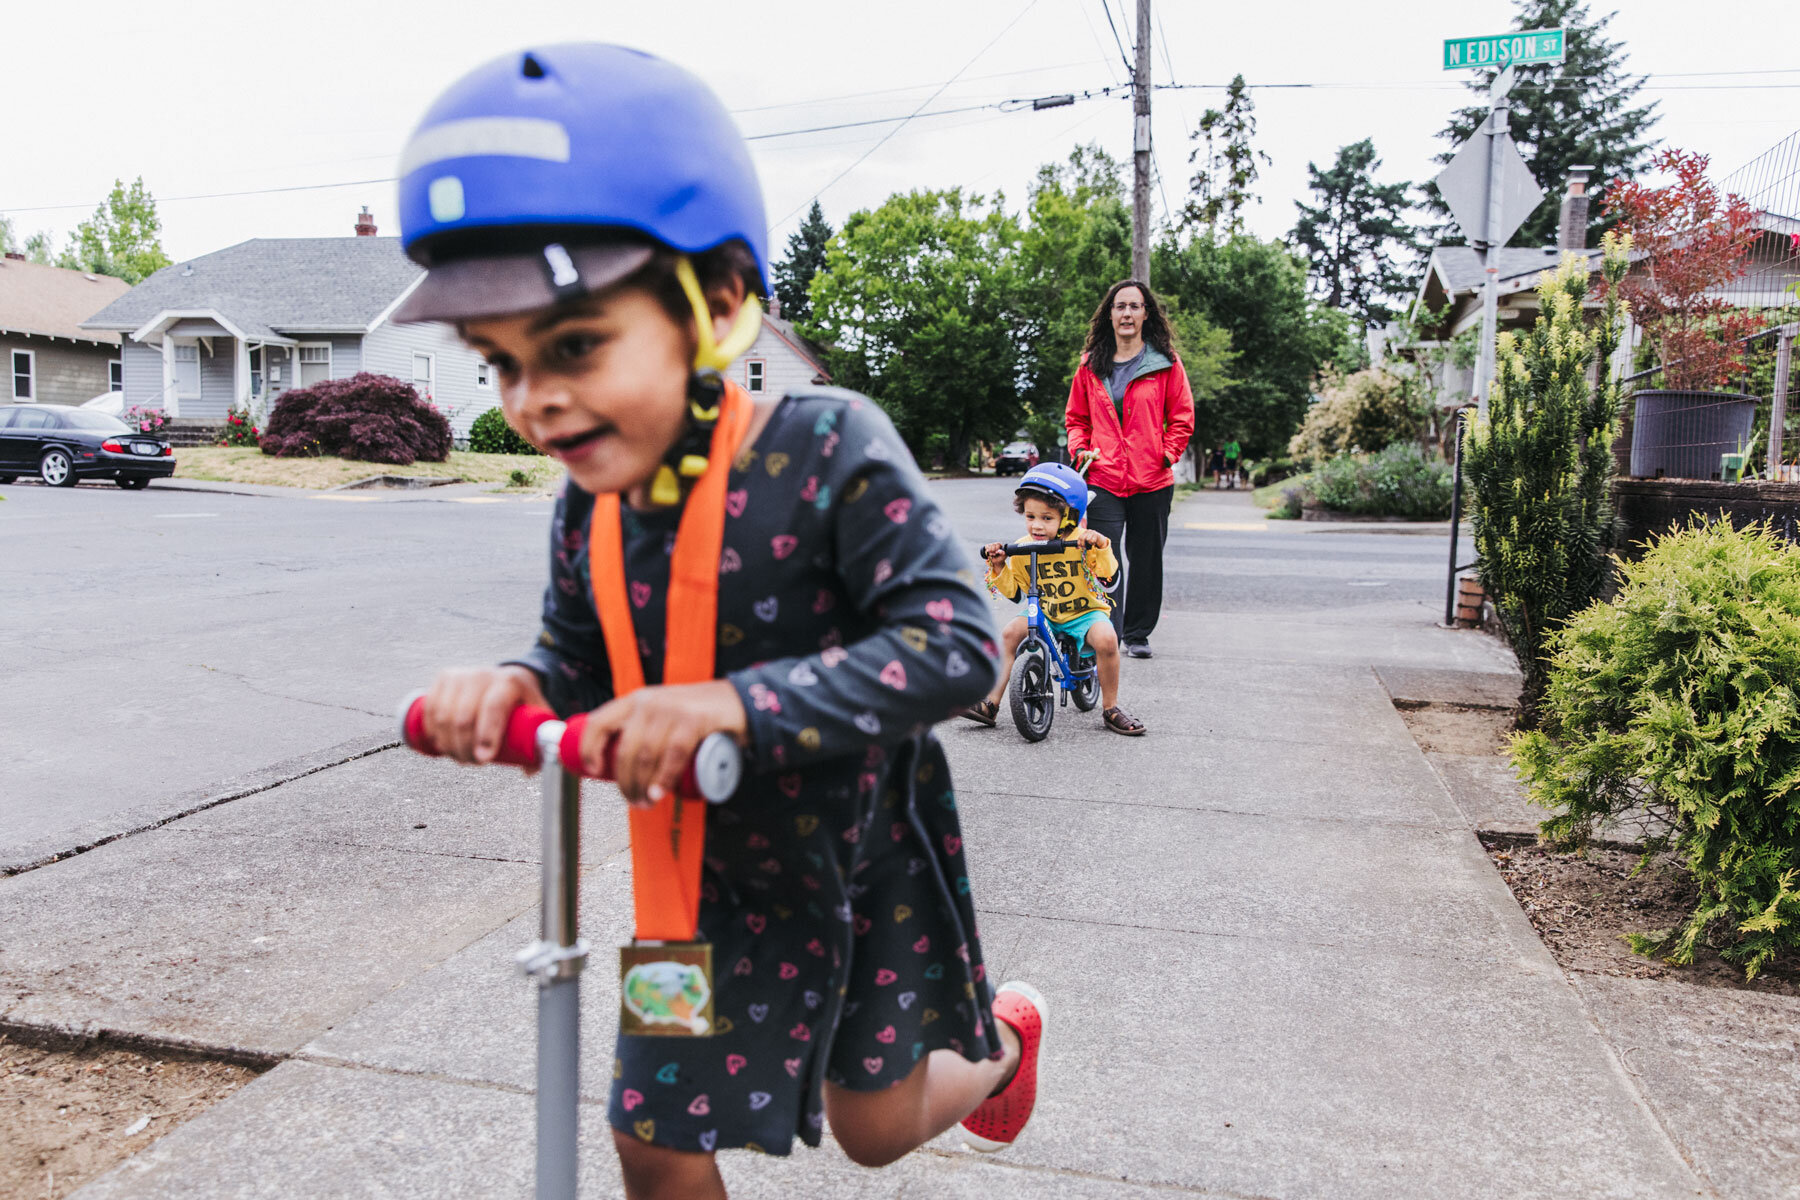 Weekends often include walks and adventures around their North Portland neighborhood.